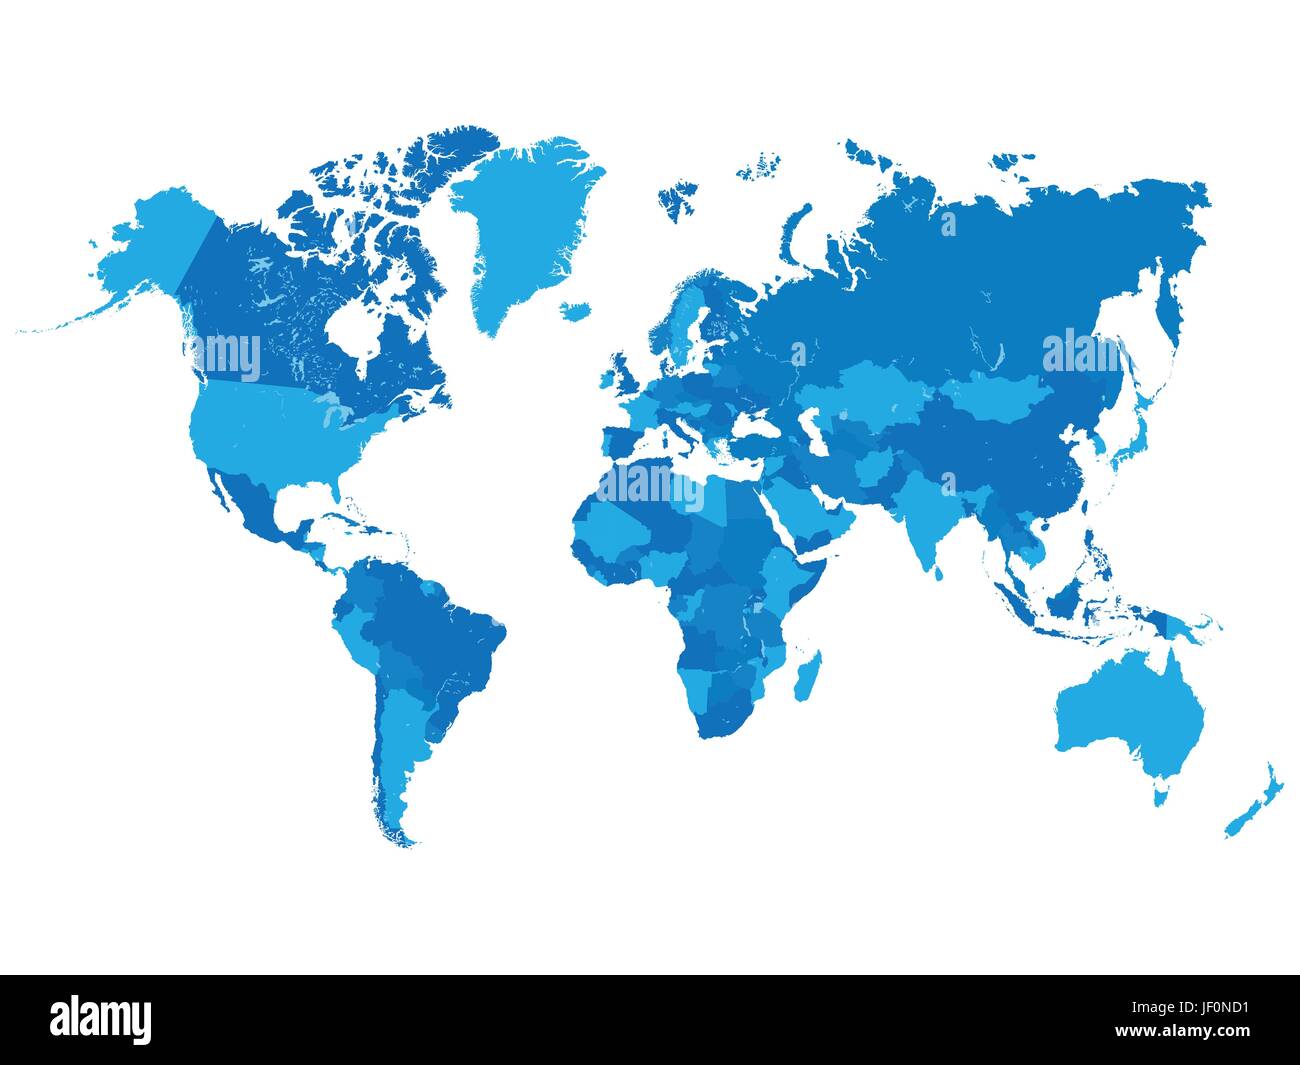 world map illustration Stock Vector